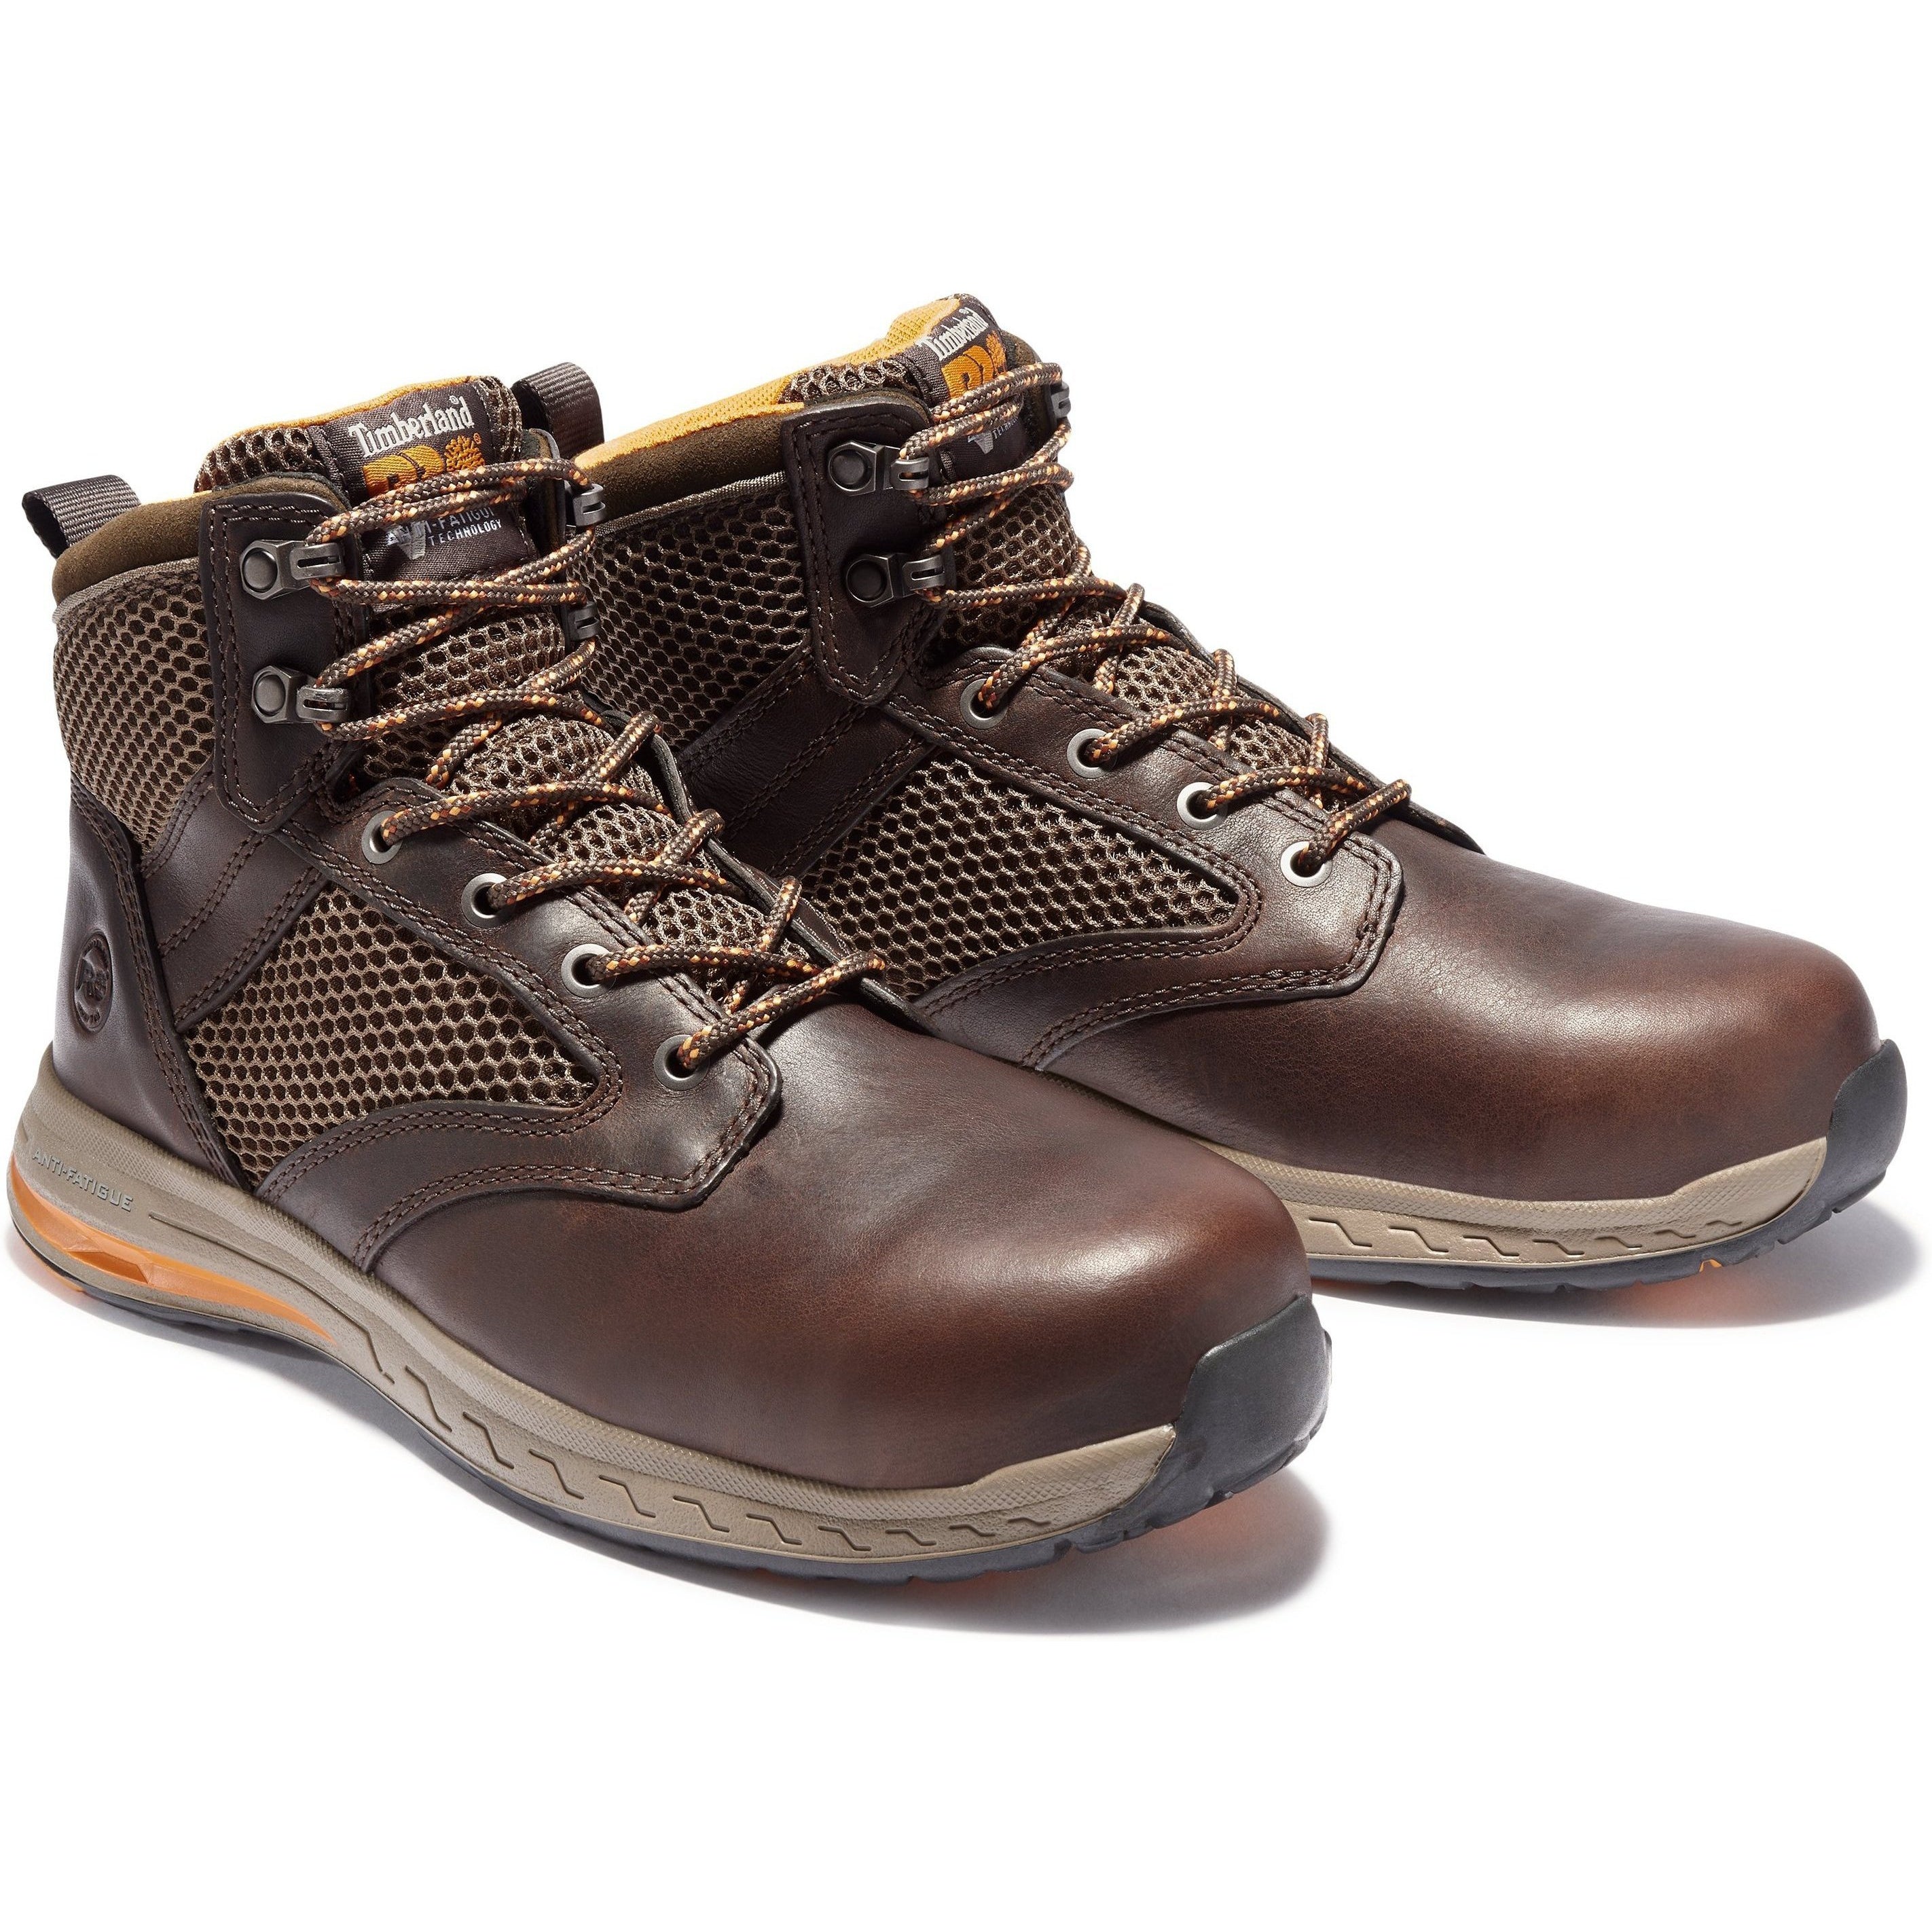 Timberland PRO Men's Drivetrain Comp Toe Work Boot Brown - TB0A1X16214 8.5 / Medium / Brown - Overlook Boots